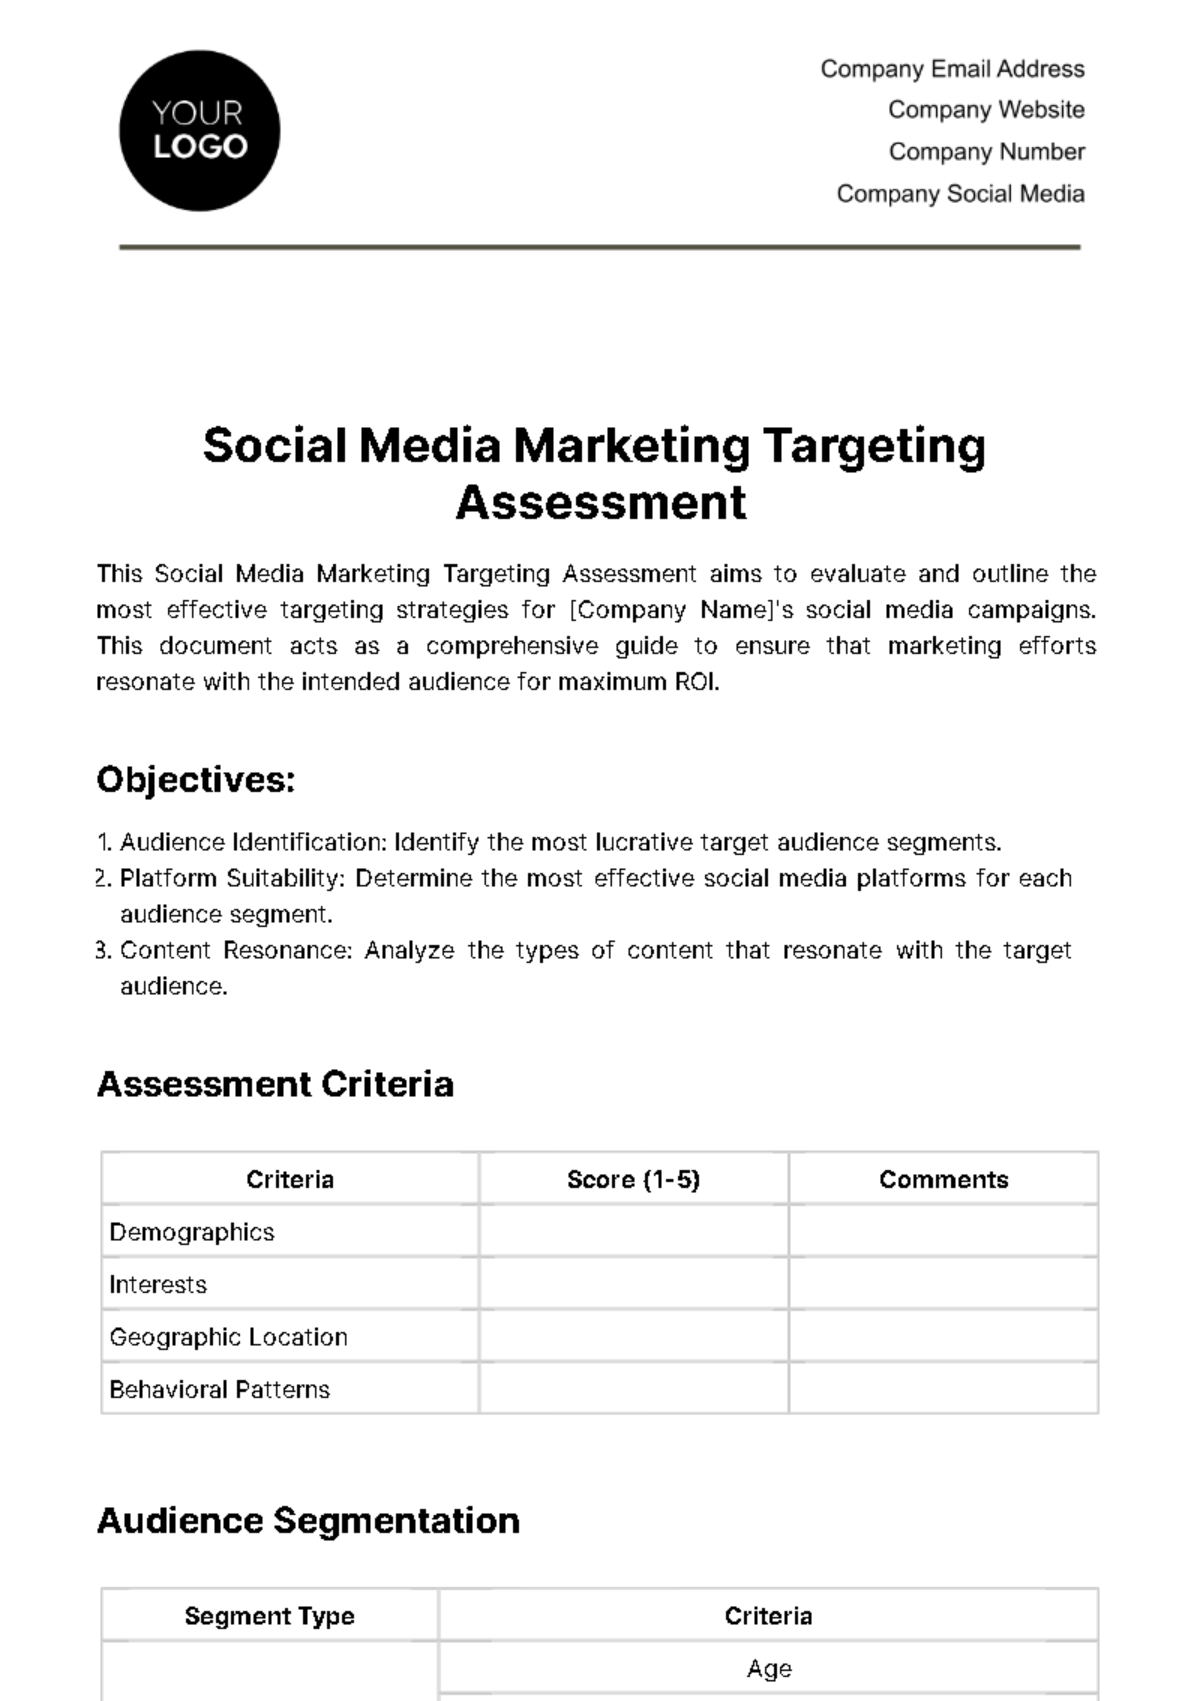 Social Media Marketing Targeting Assessment Template